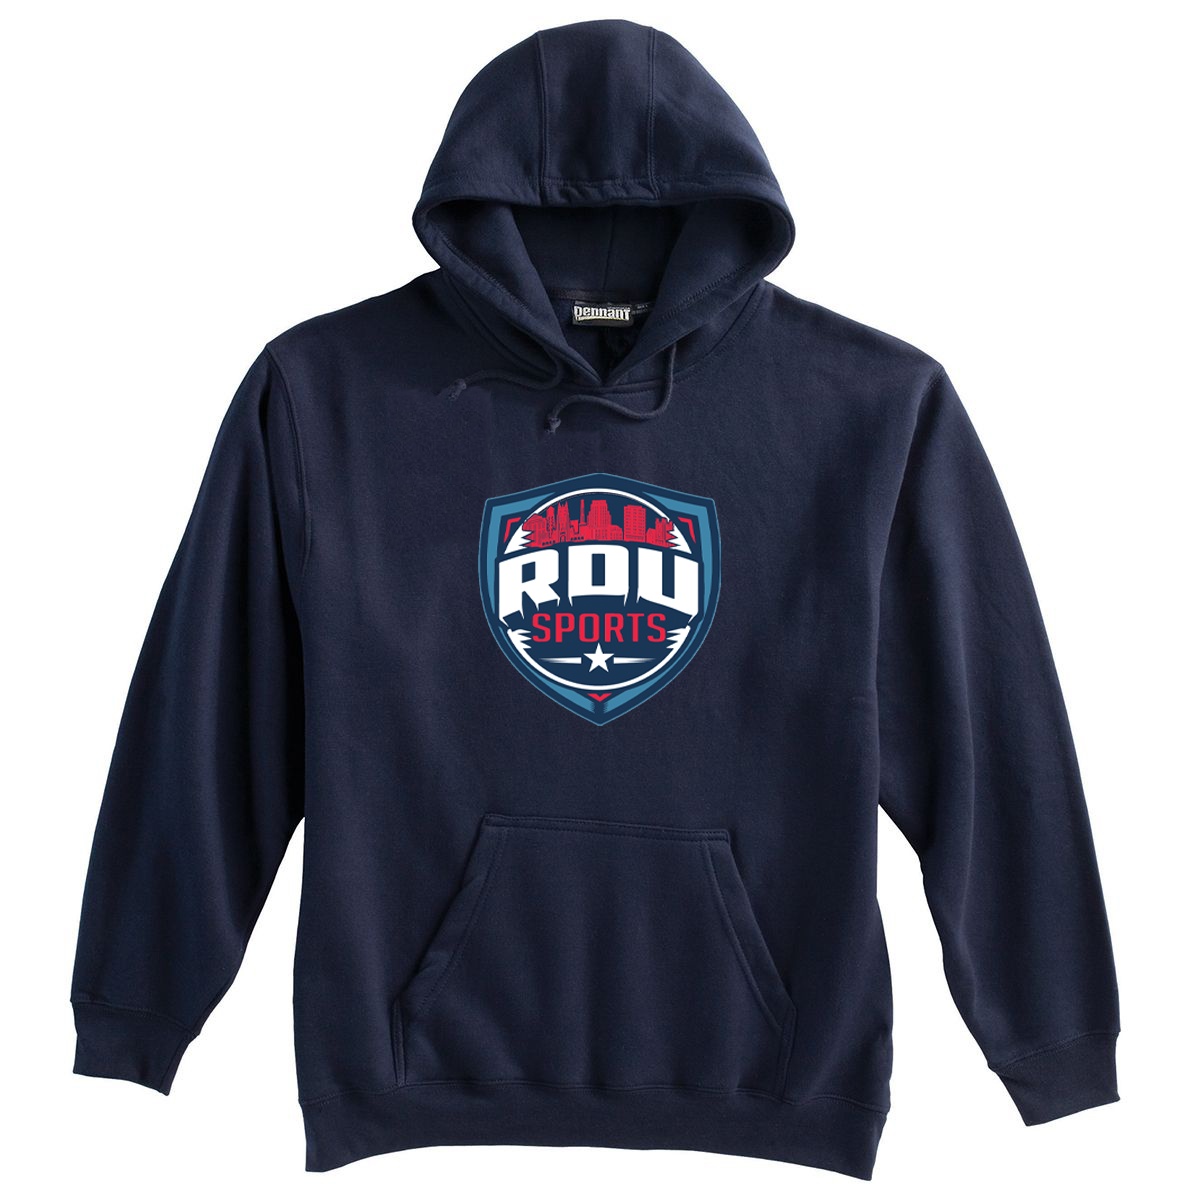 RDU Sports Sweatshirt